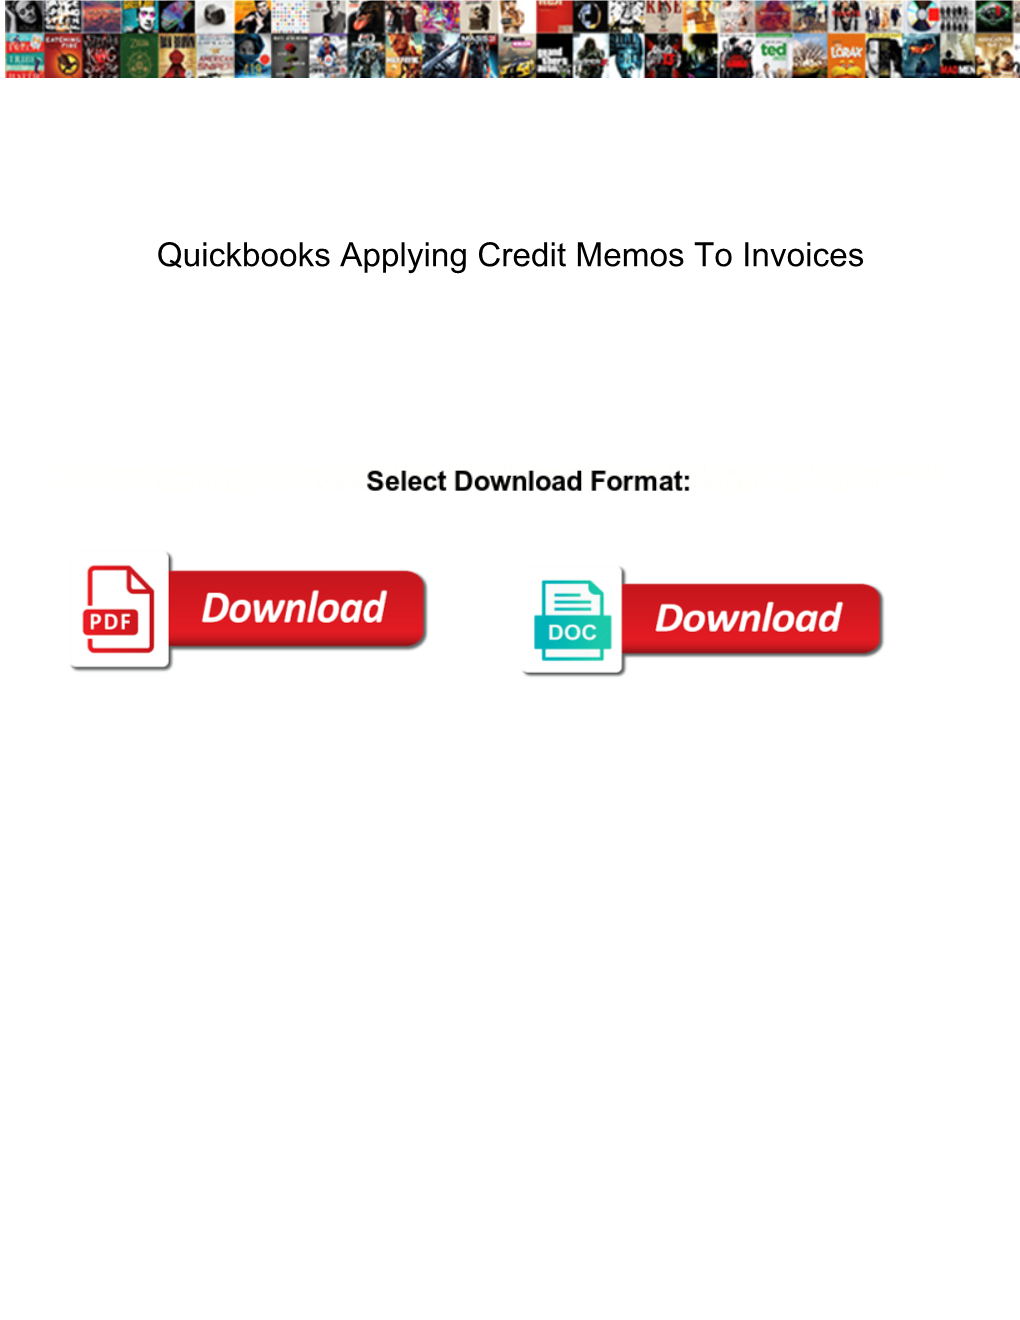 Quickbooks Applying Credit Memos to Invoices